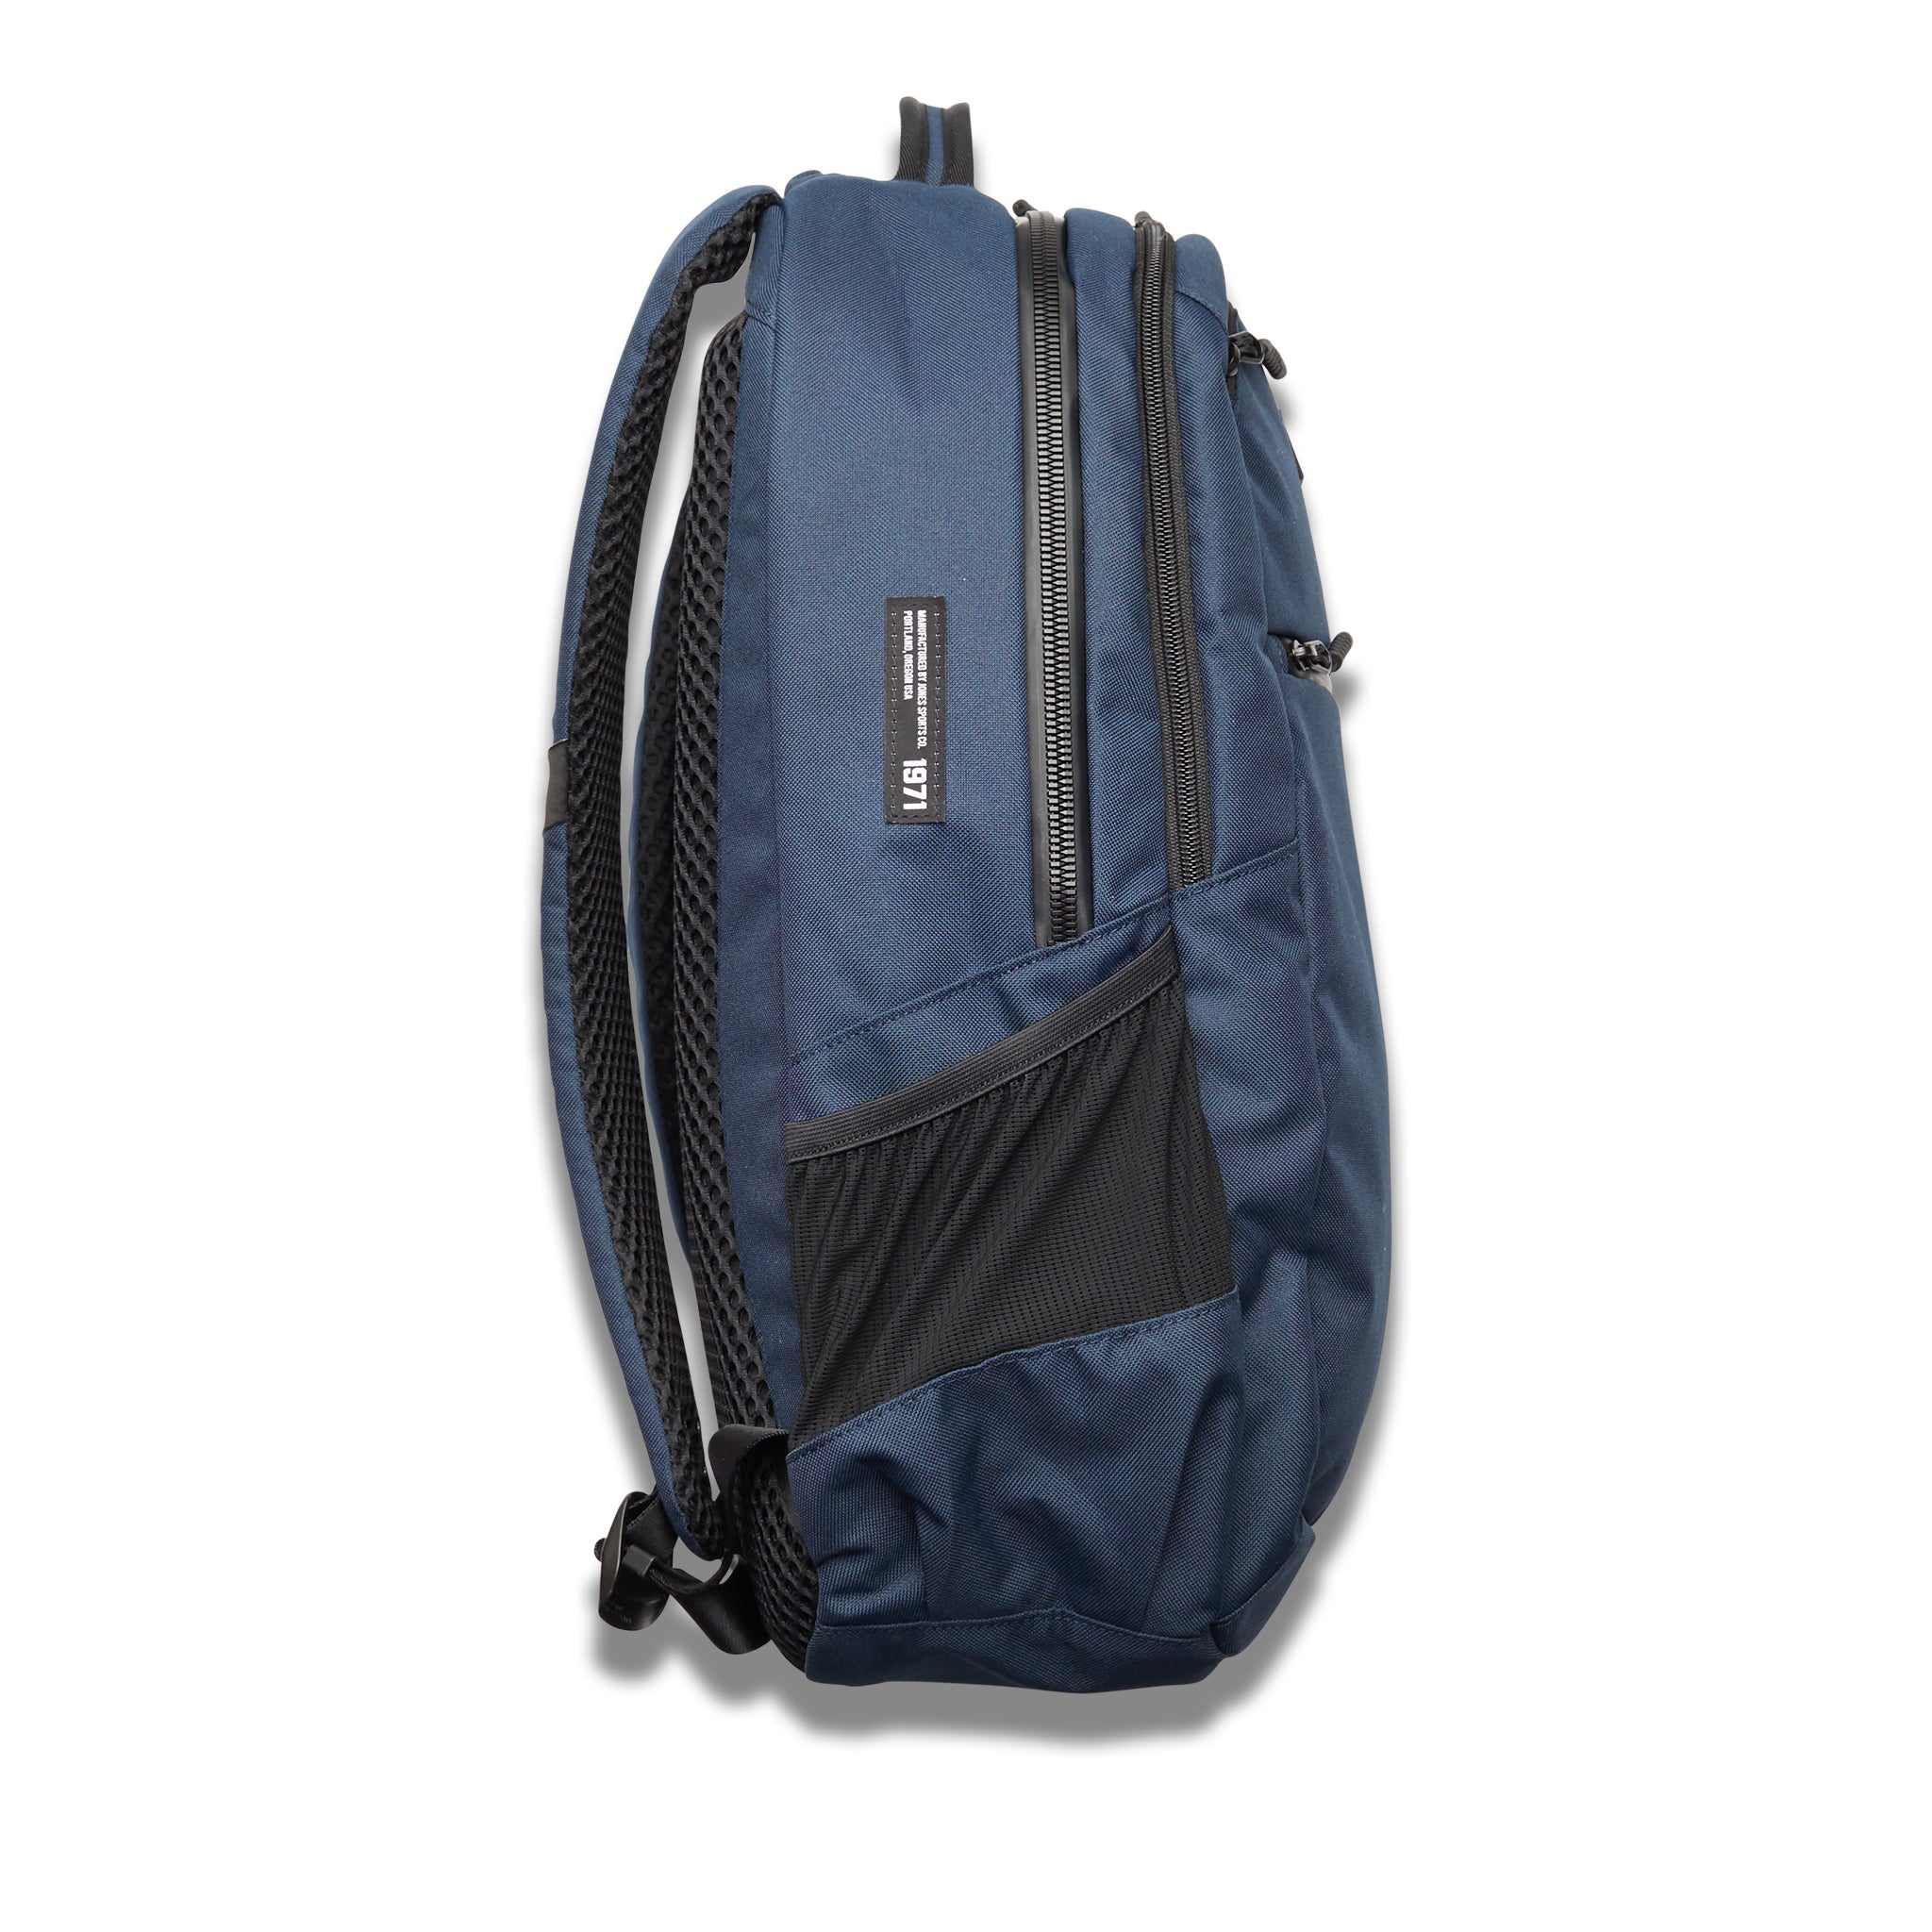 Jones Sports Co. A1 Backpack - Navy